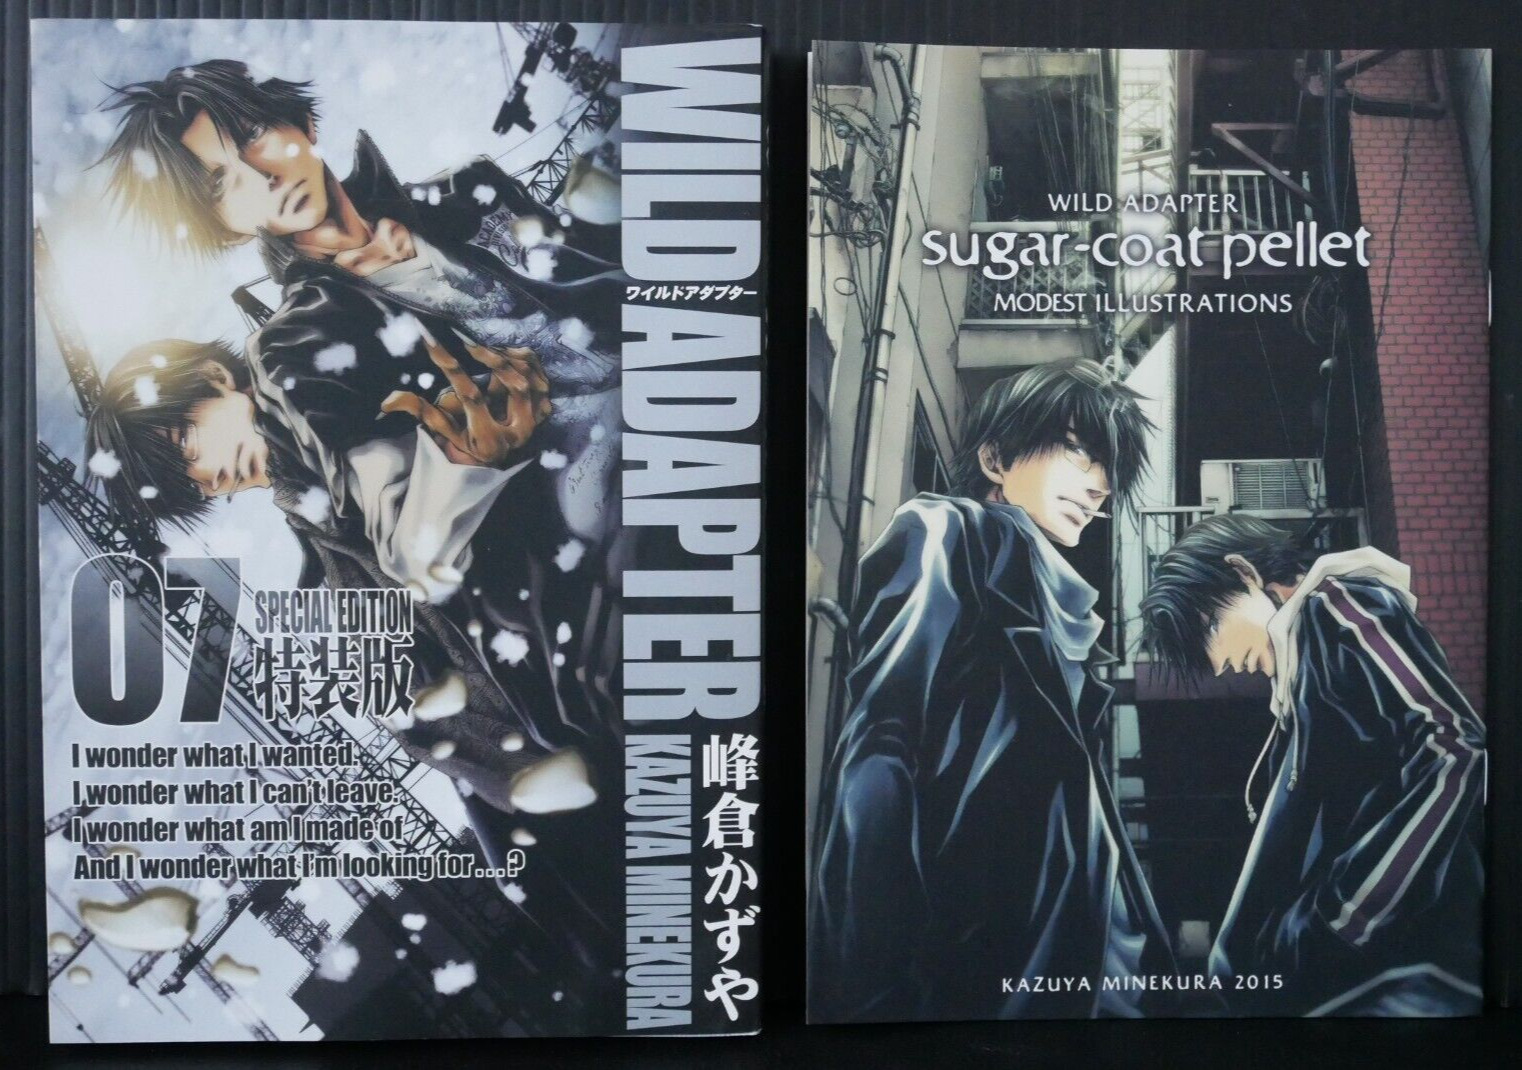 Wild Adapter Manga vol.7 Limited Edition - by Kazuya Minekura W/Drama CD - Japan